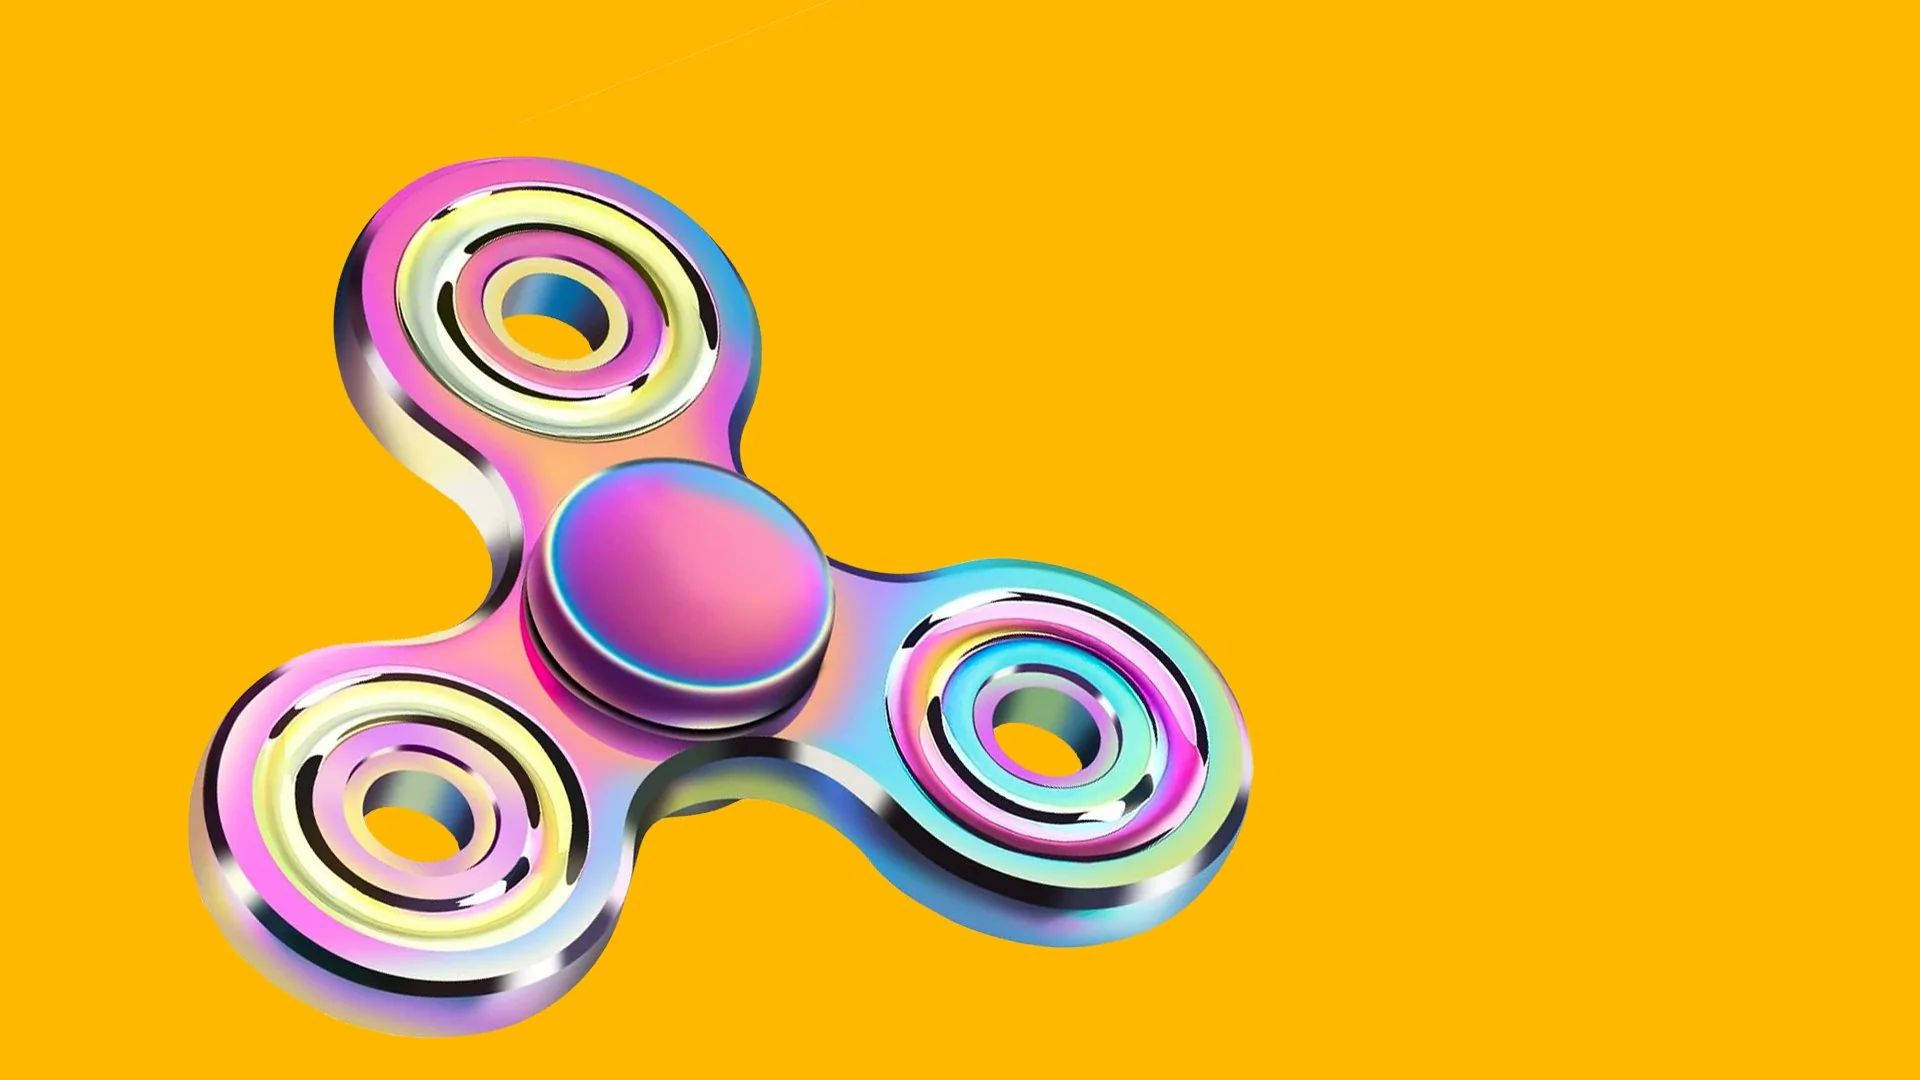 Caption: Colorful Fidget Toy On A Gradient Background